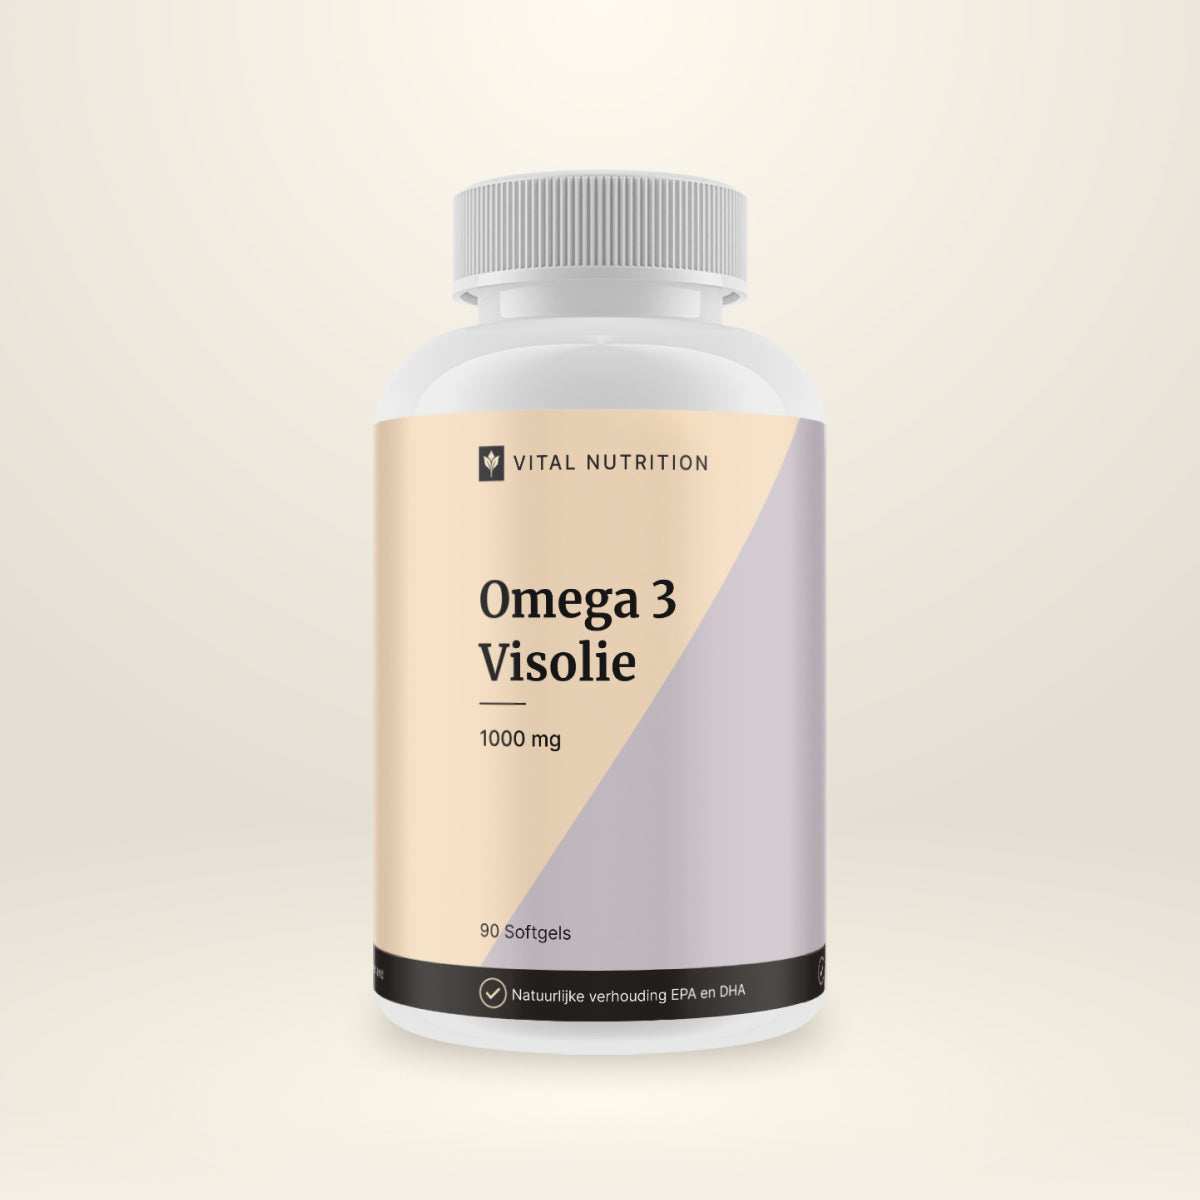 Omega 3 Visolie van Vital Nutrition product afbeelding